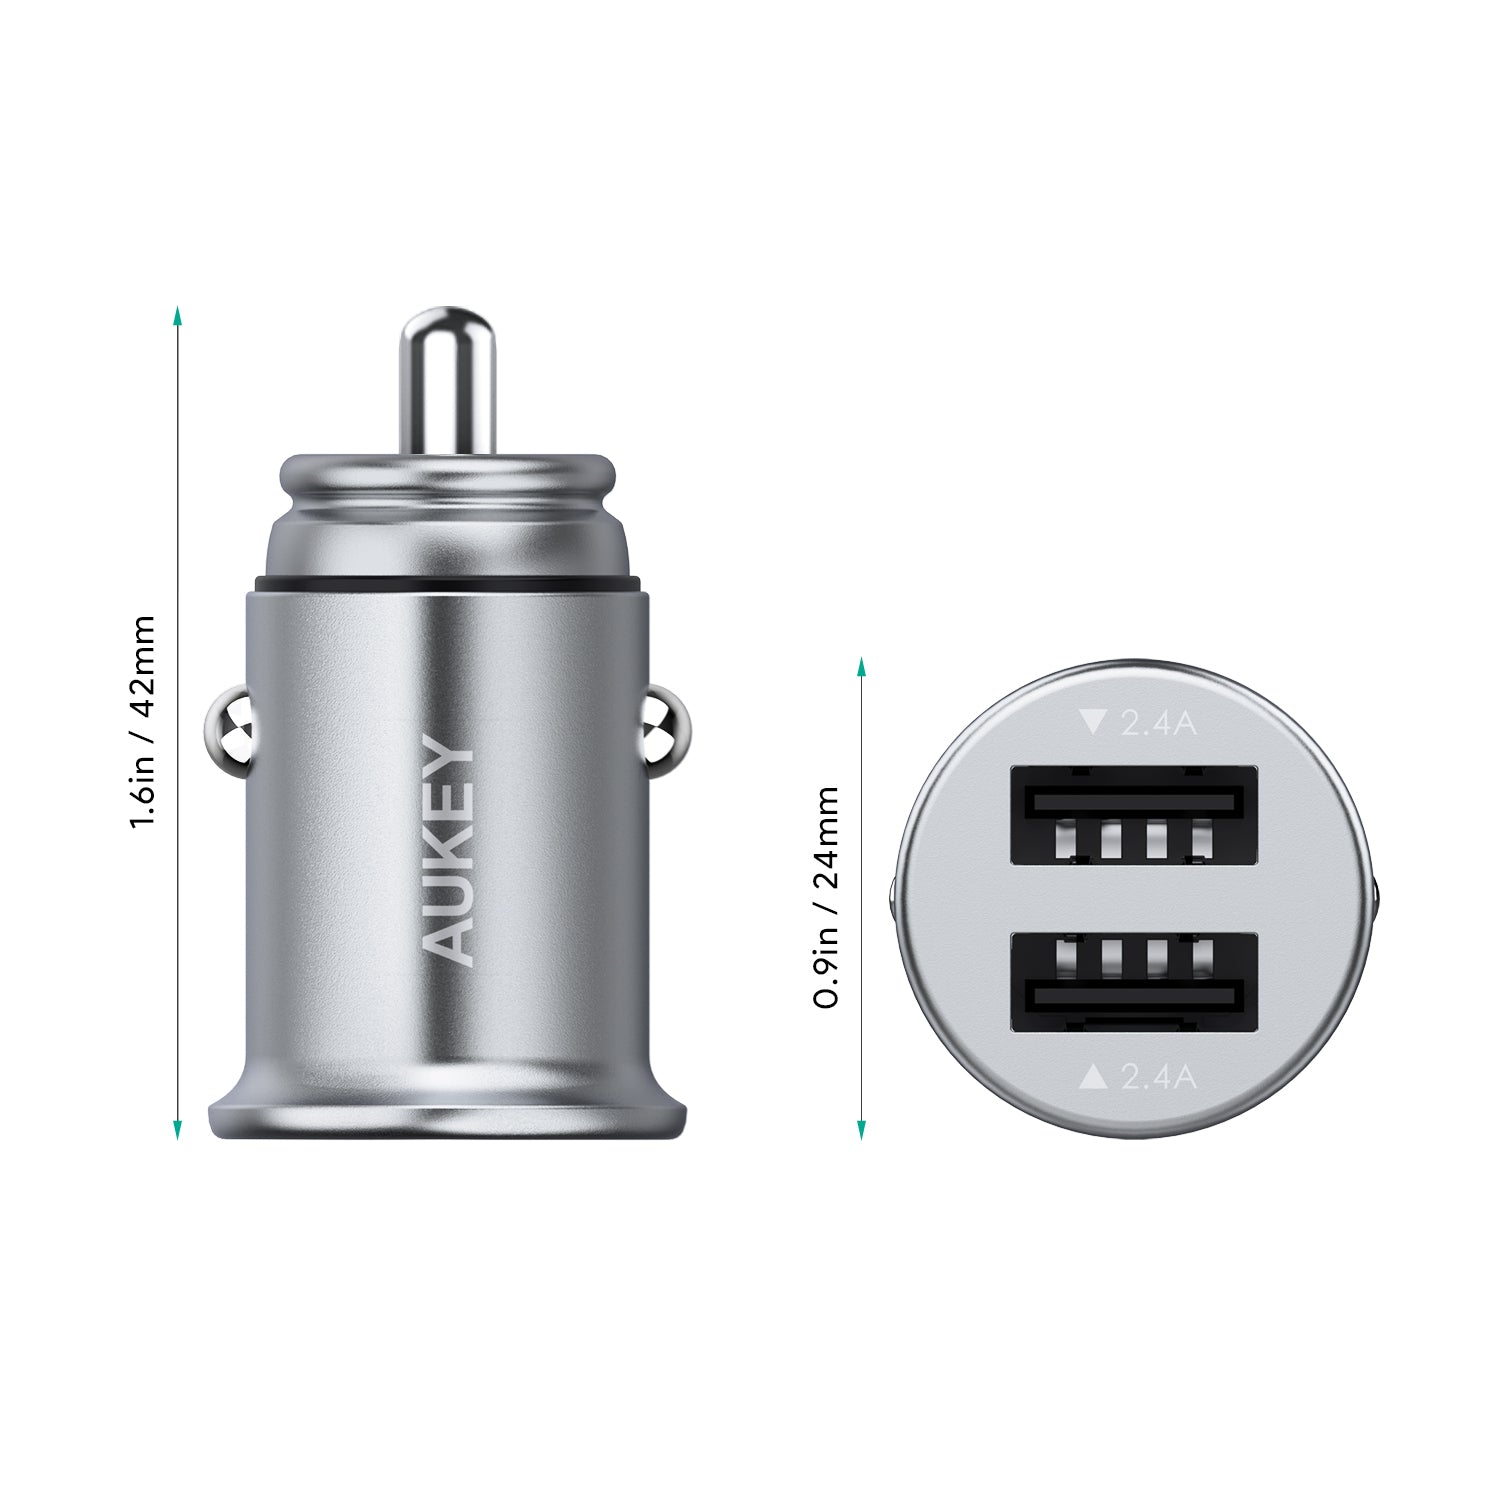 AUKEY CC-S2, Flush Fit Autoladegerät mit Aluminiumschale und 4.8A Dual-Port USB Ausgang für iPhone X / 8 Plus, iPad Pro / Air 2 / mini 4, und Samsung Galaxy Note8 / S8+